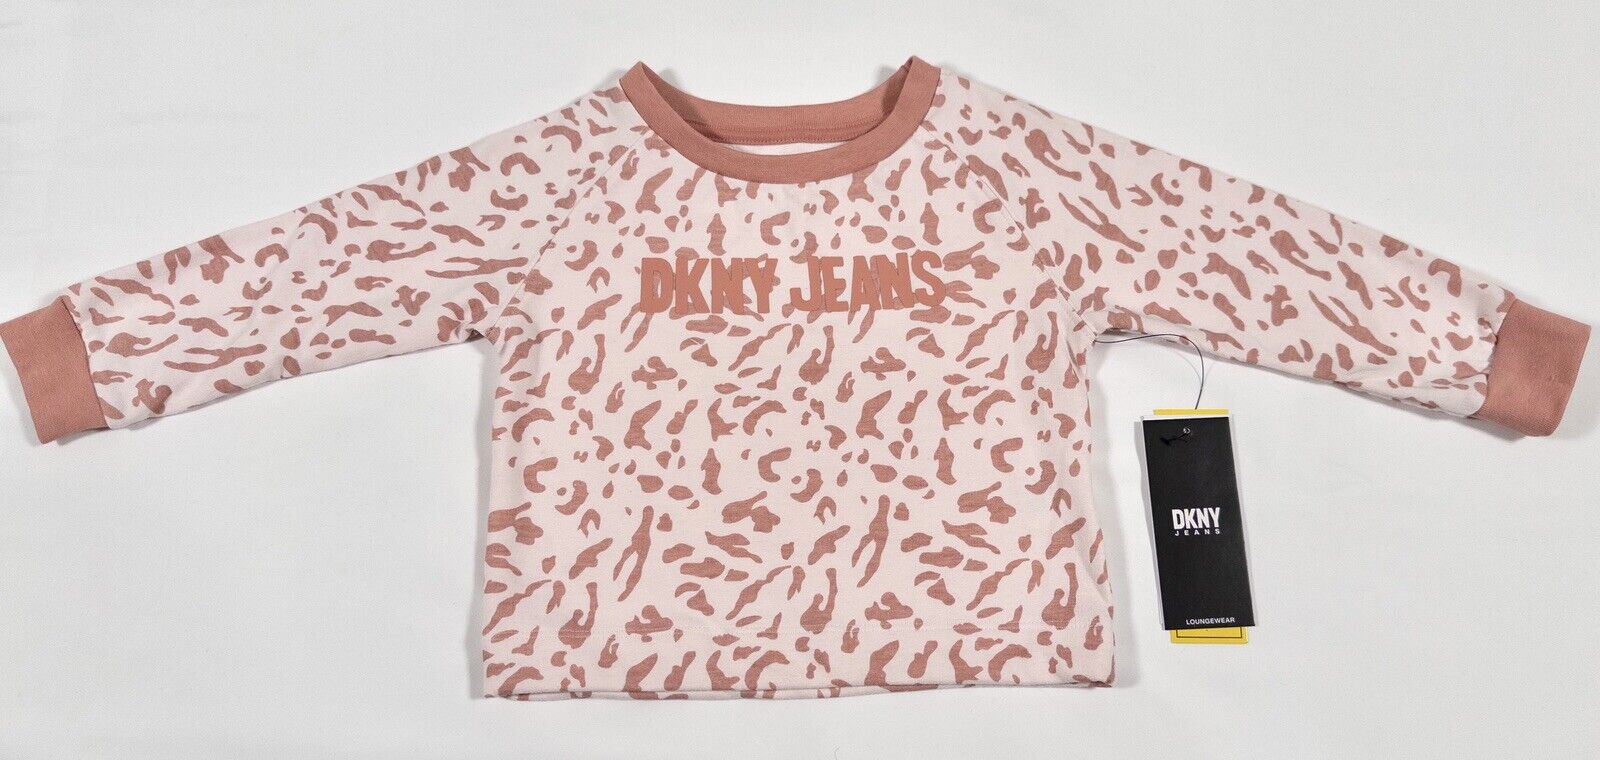 DKNY JEANS Kids Girls Jumper Top Long Sleeve Animal Print Size UK 18 Months Pink